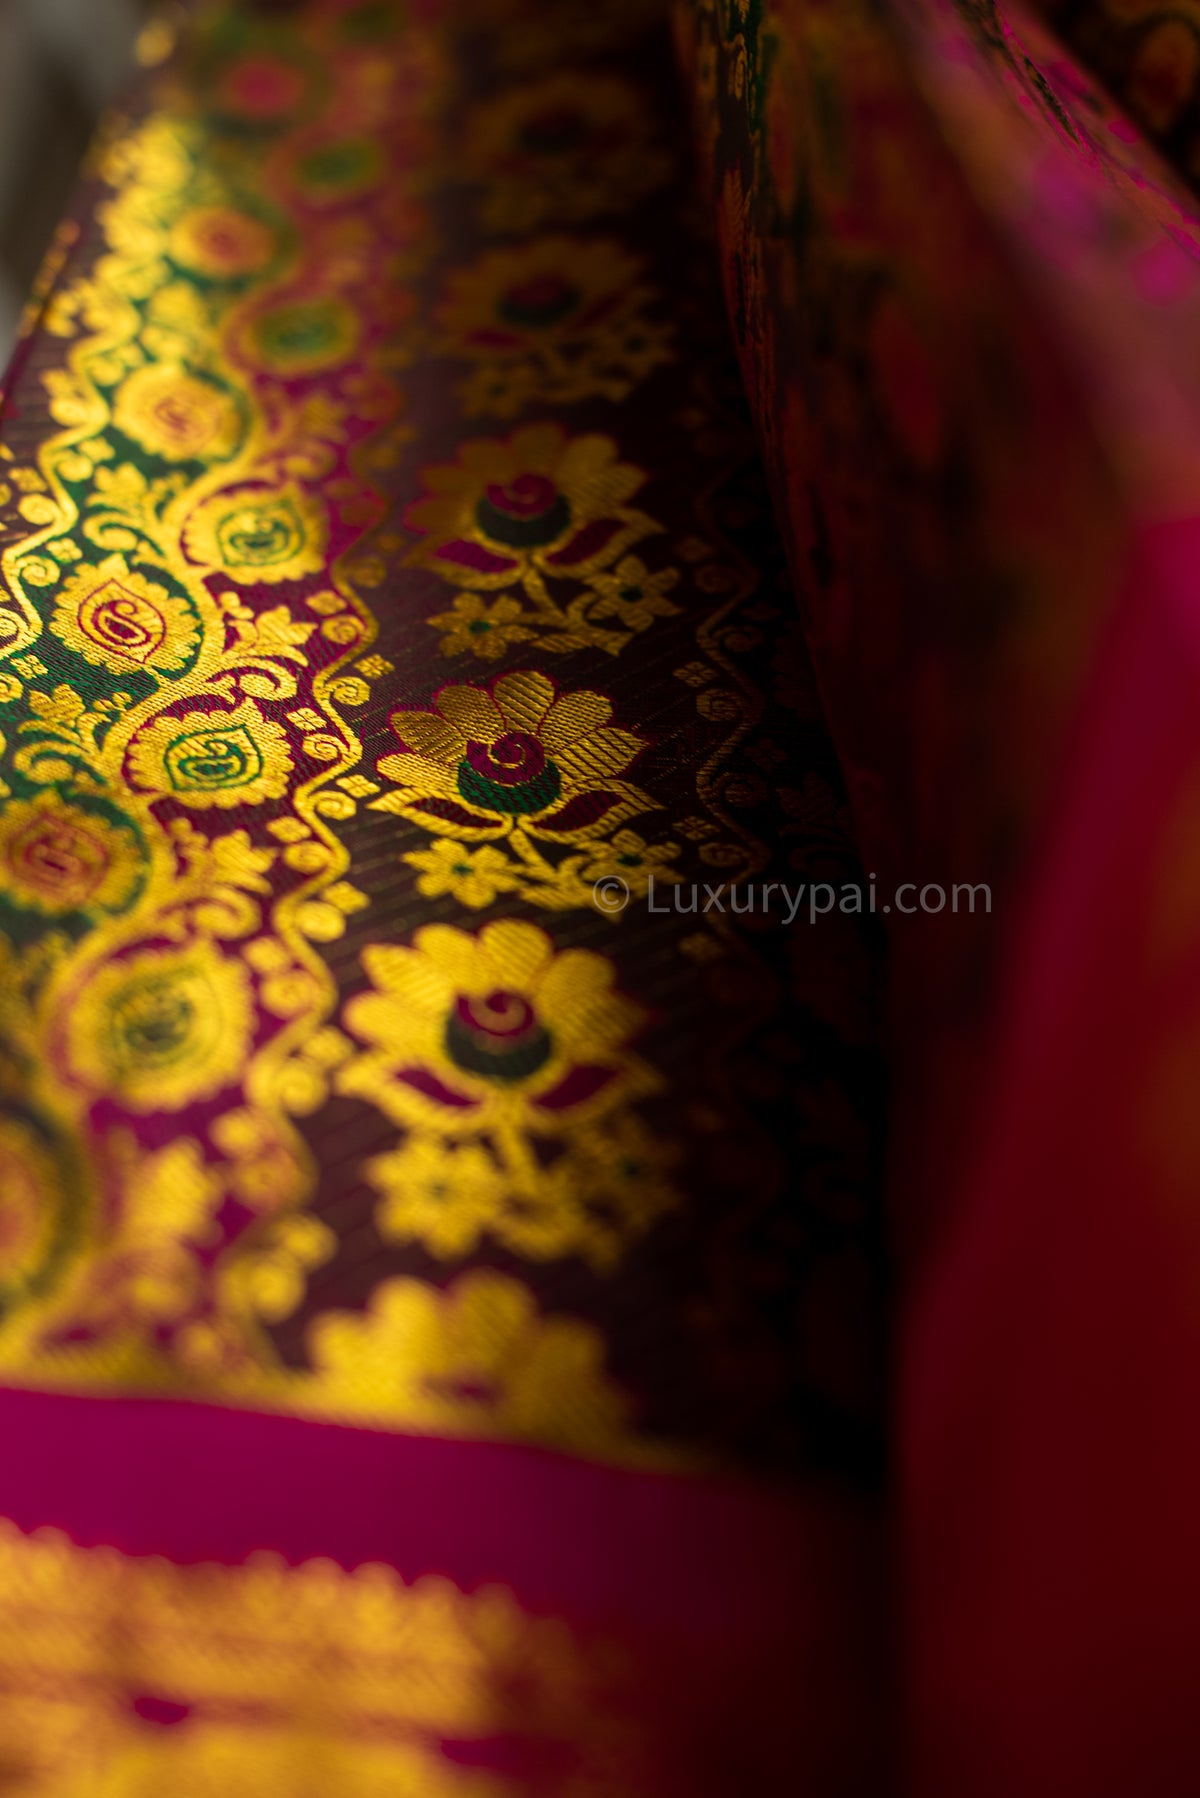 Dazzling Iridescent Kanchipuram Pure Pattu (Silk) Handloom Kai Korvai Bridal Wedding Saree